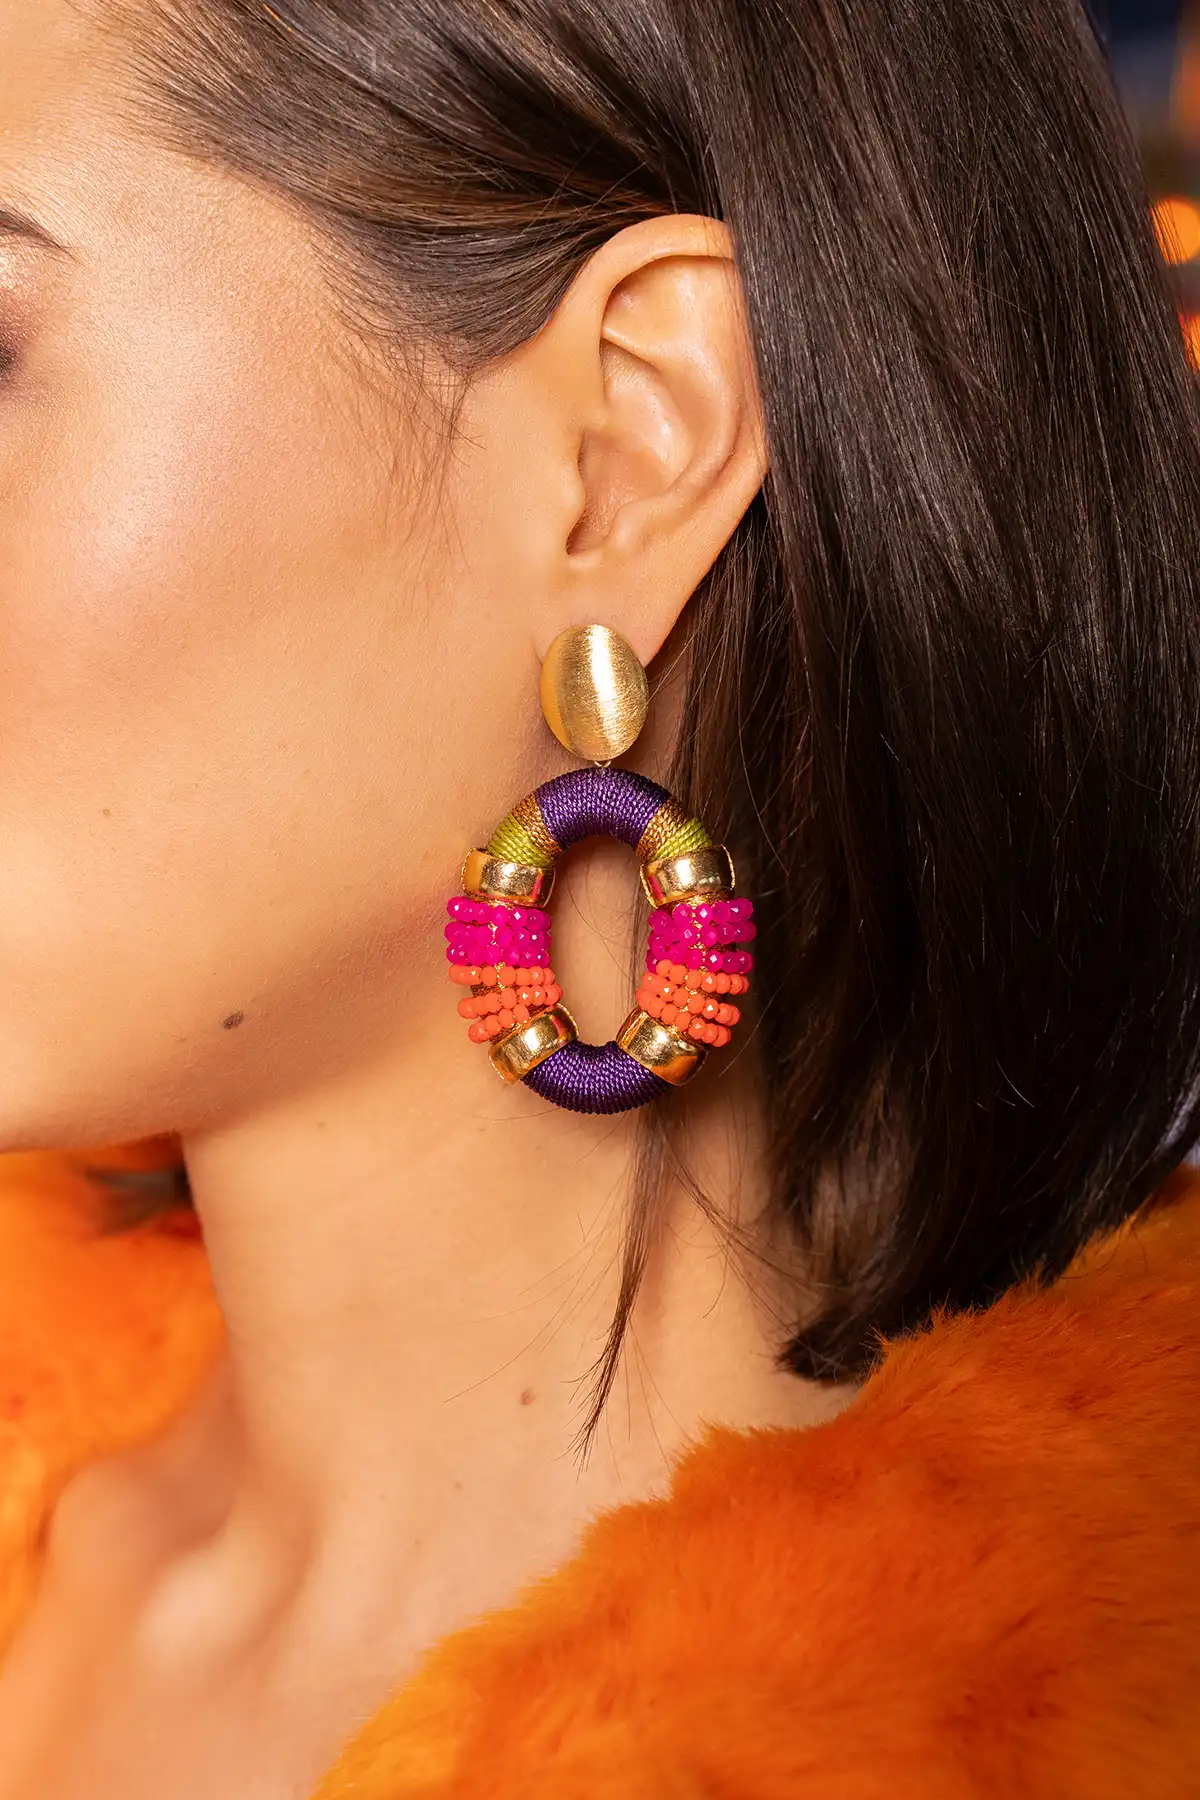 Purple Fuchsia Earrings Caroline Oval L Premiumlott-theme.productDescriptionPage.SEO.byTheBrand